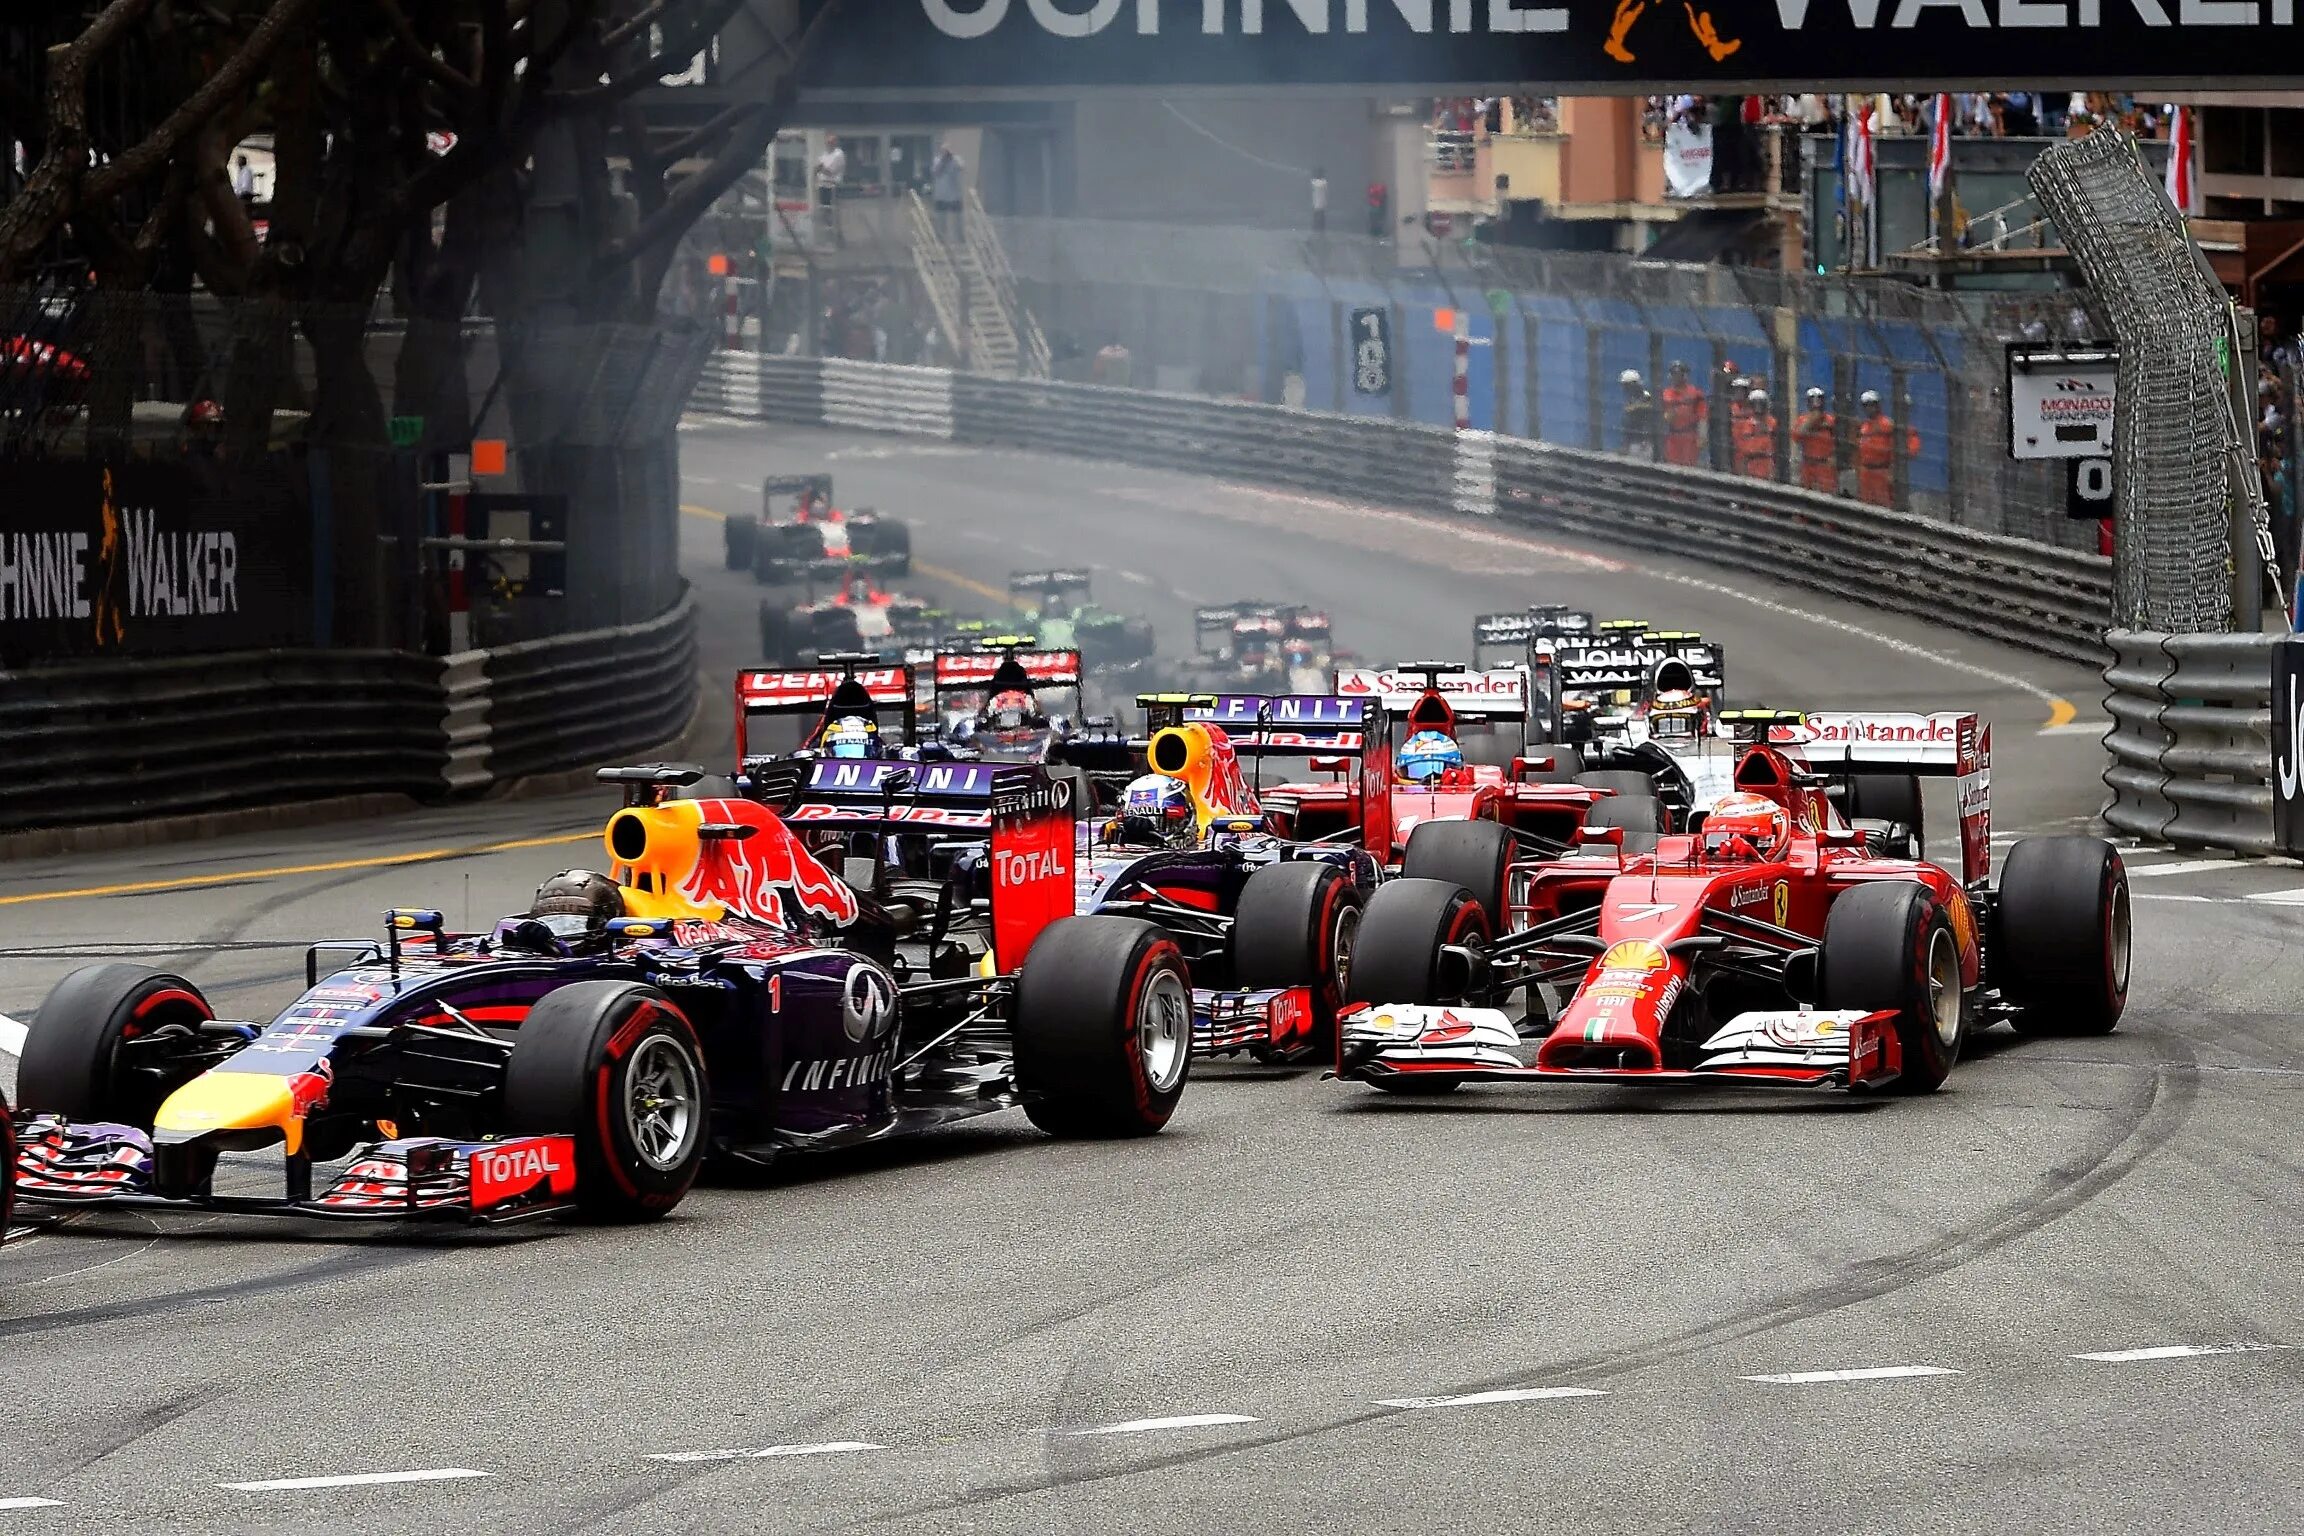 Болиды Ferrari f1 2014. Mercedes Monaco f1 2014. Monaco f1 track. Болиды формулы 1 2014.